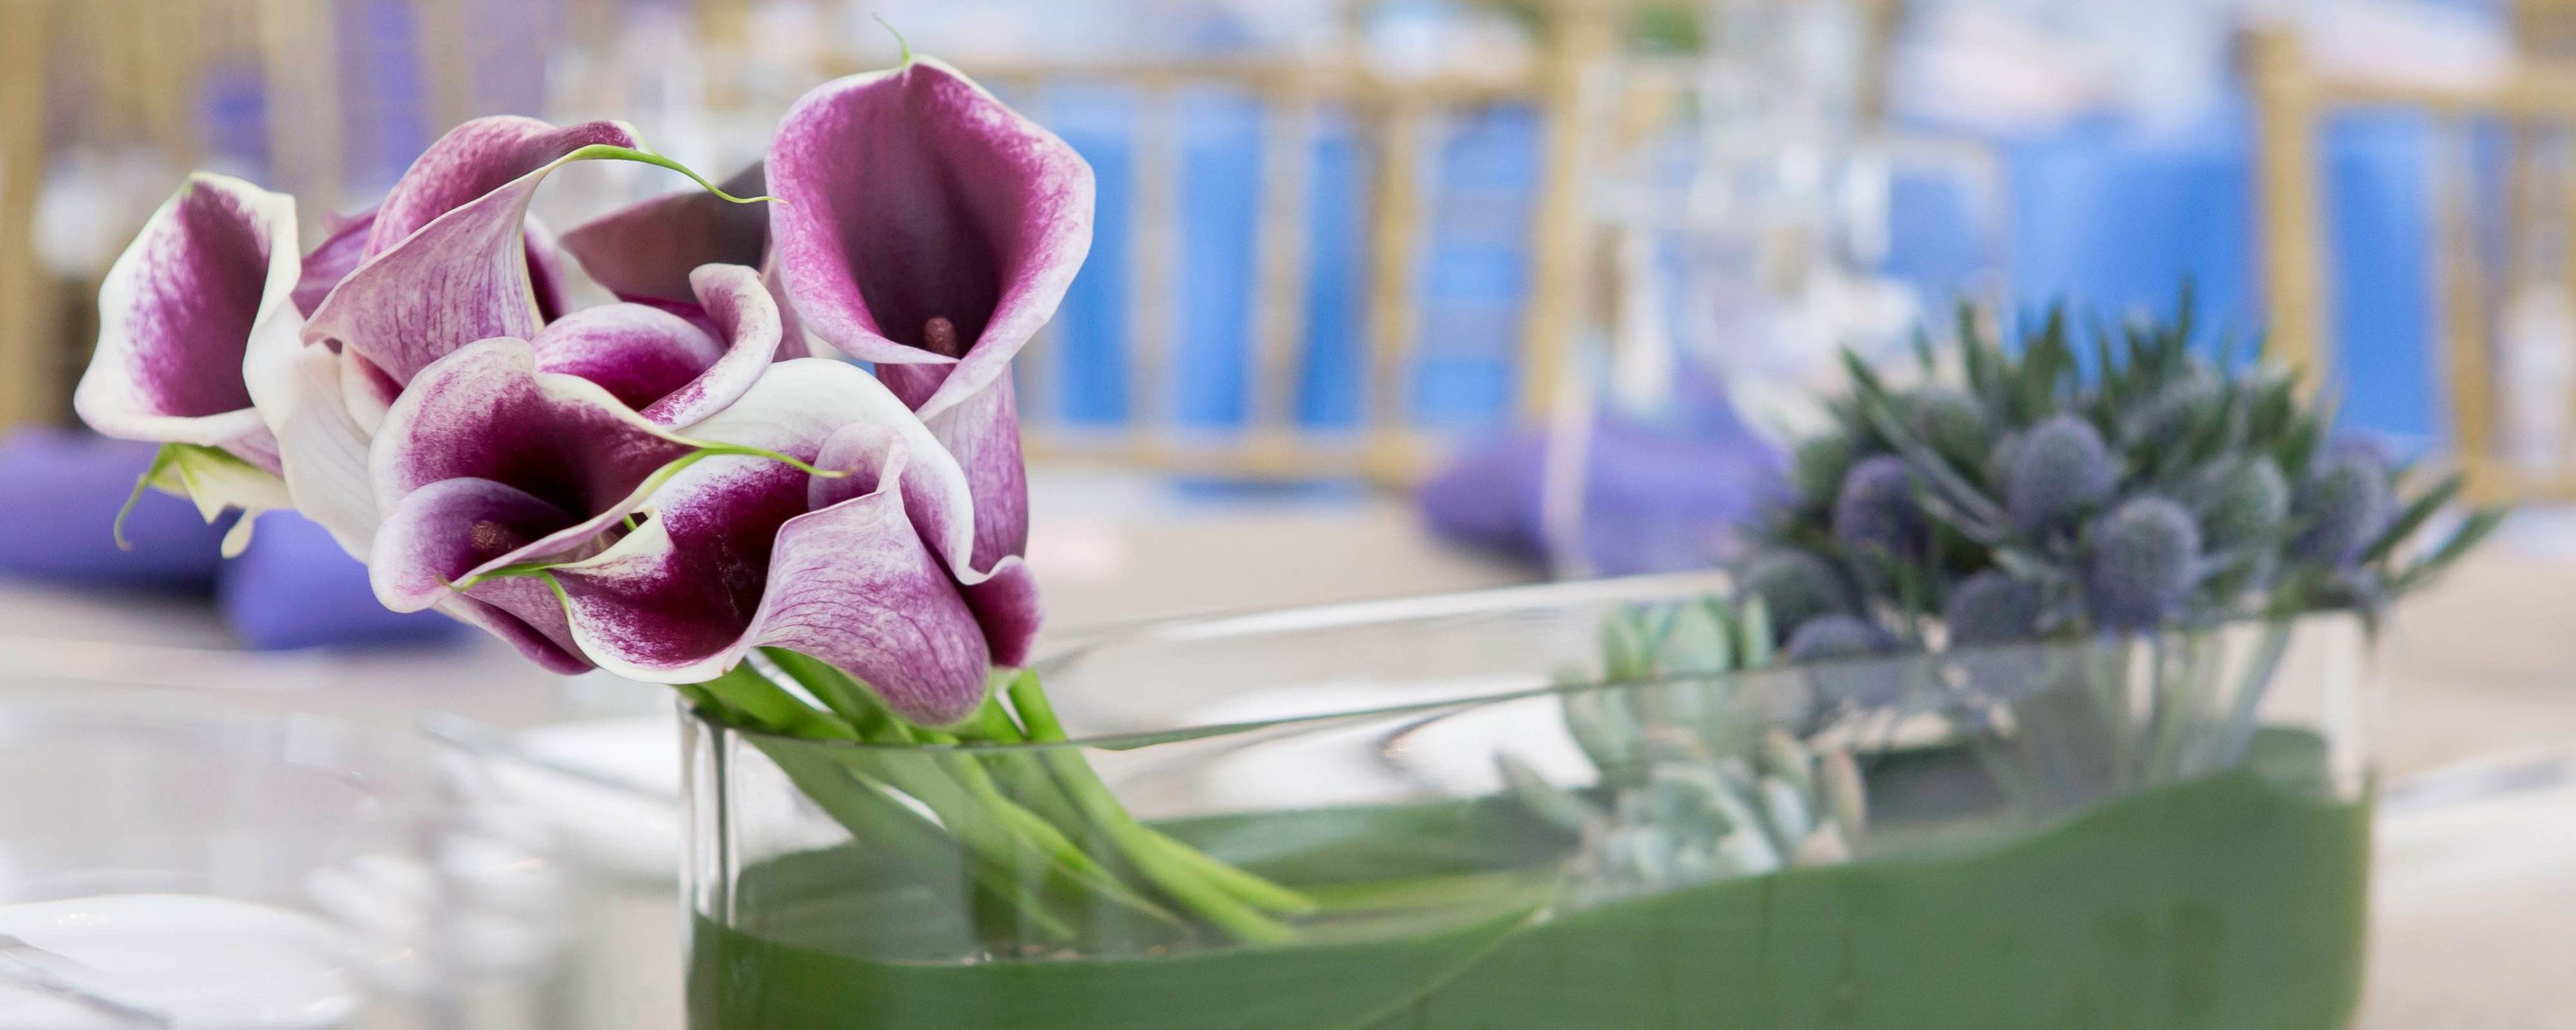 Close up of purple cala lily flower arrangement